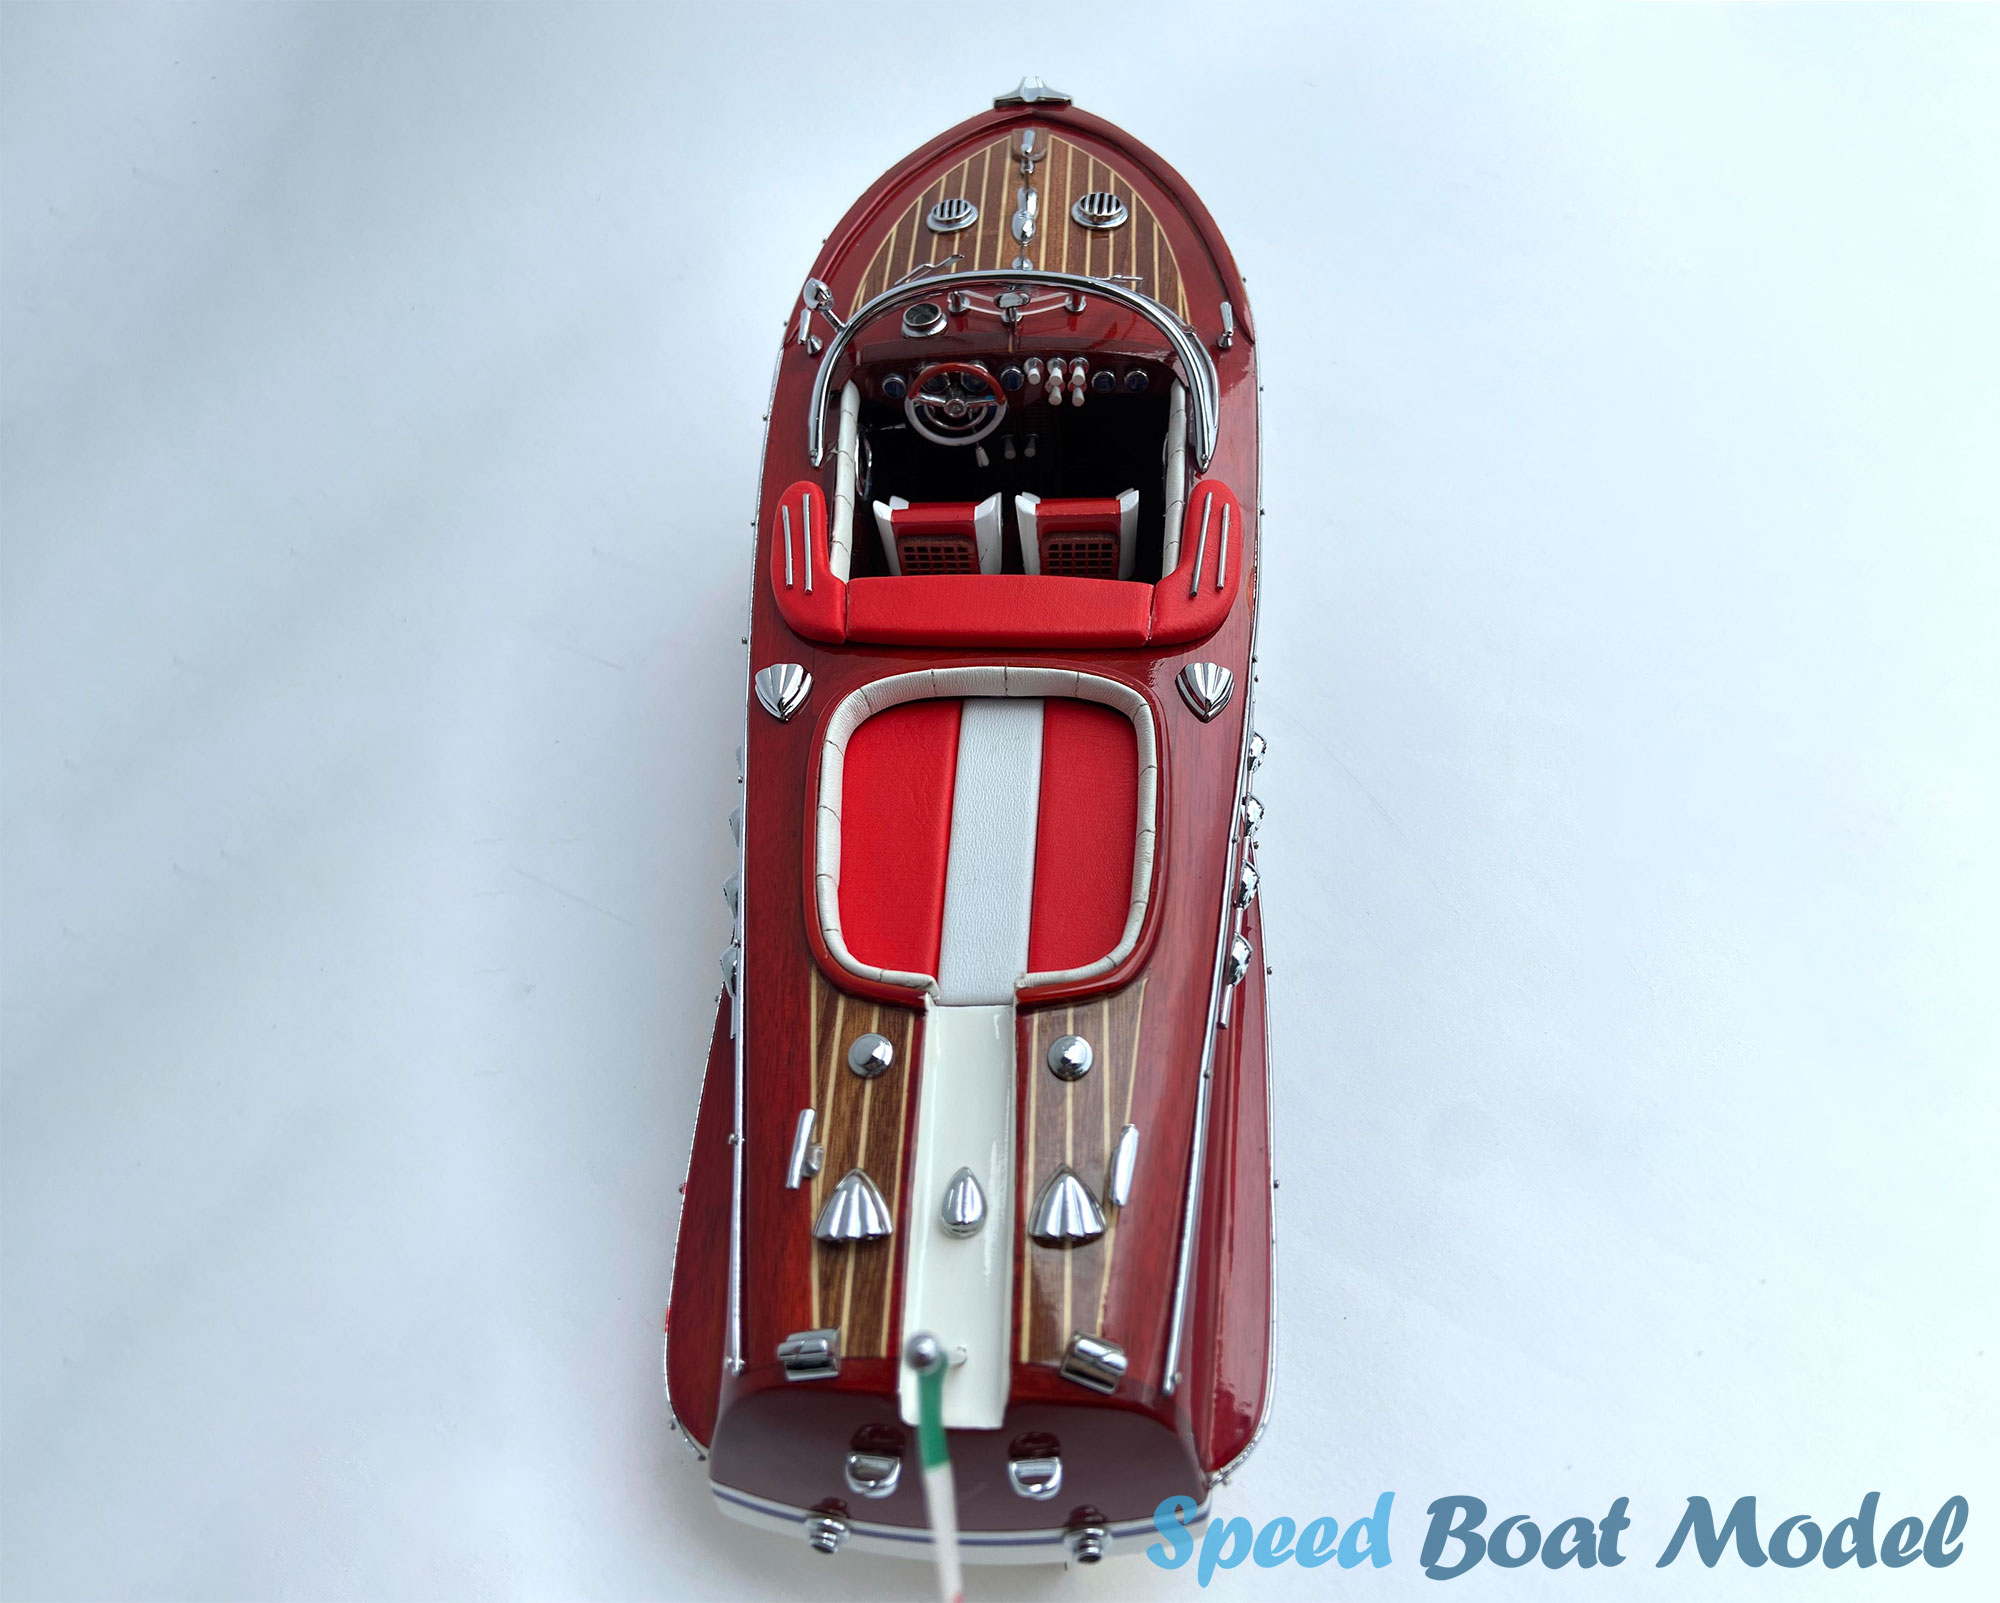 Red Super Riva Aquarama Classic Boat Model 34.2″